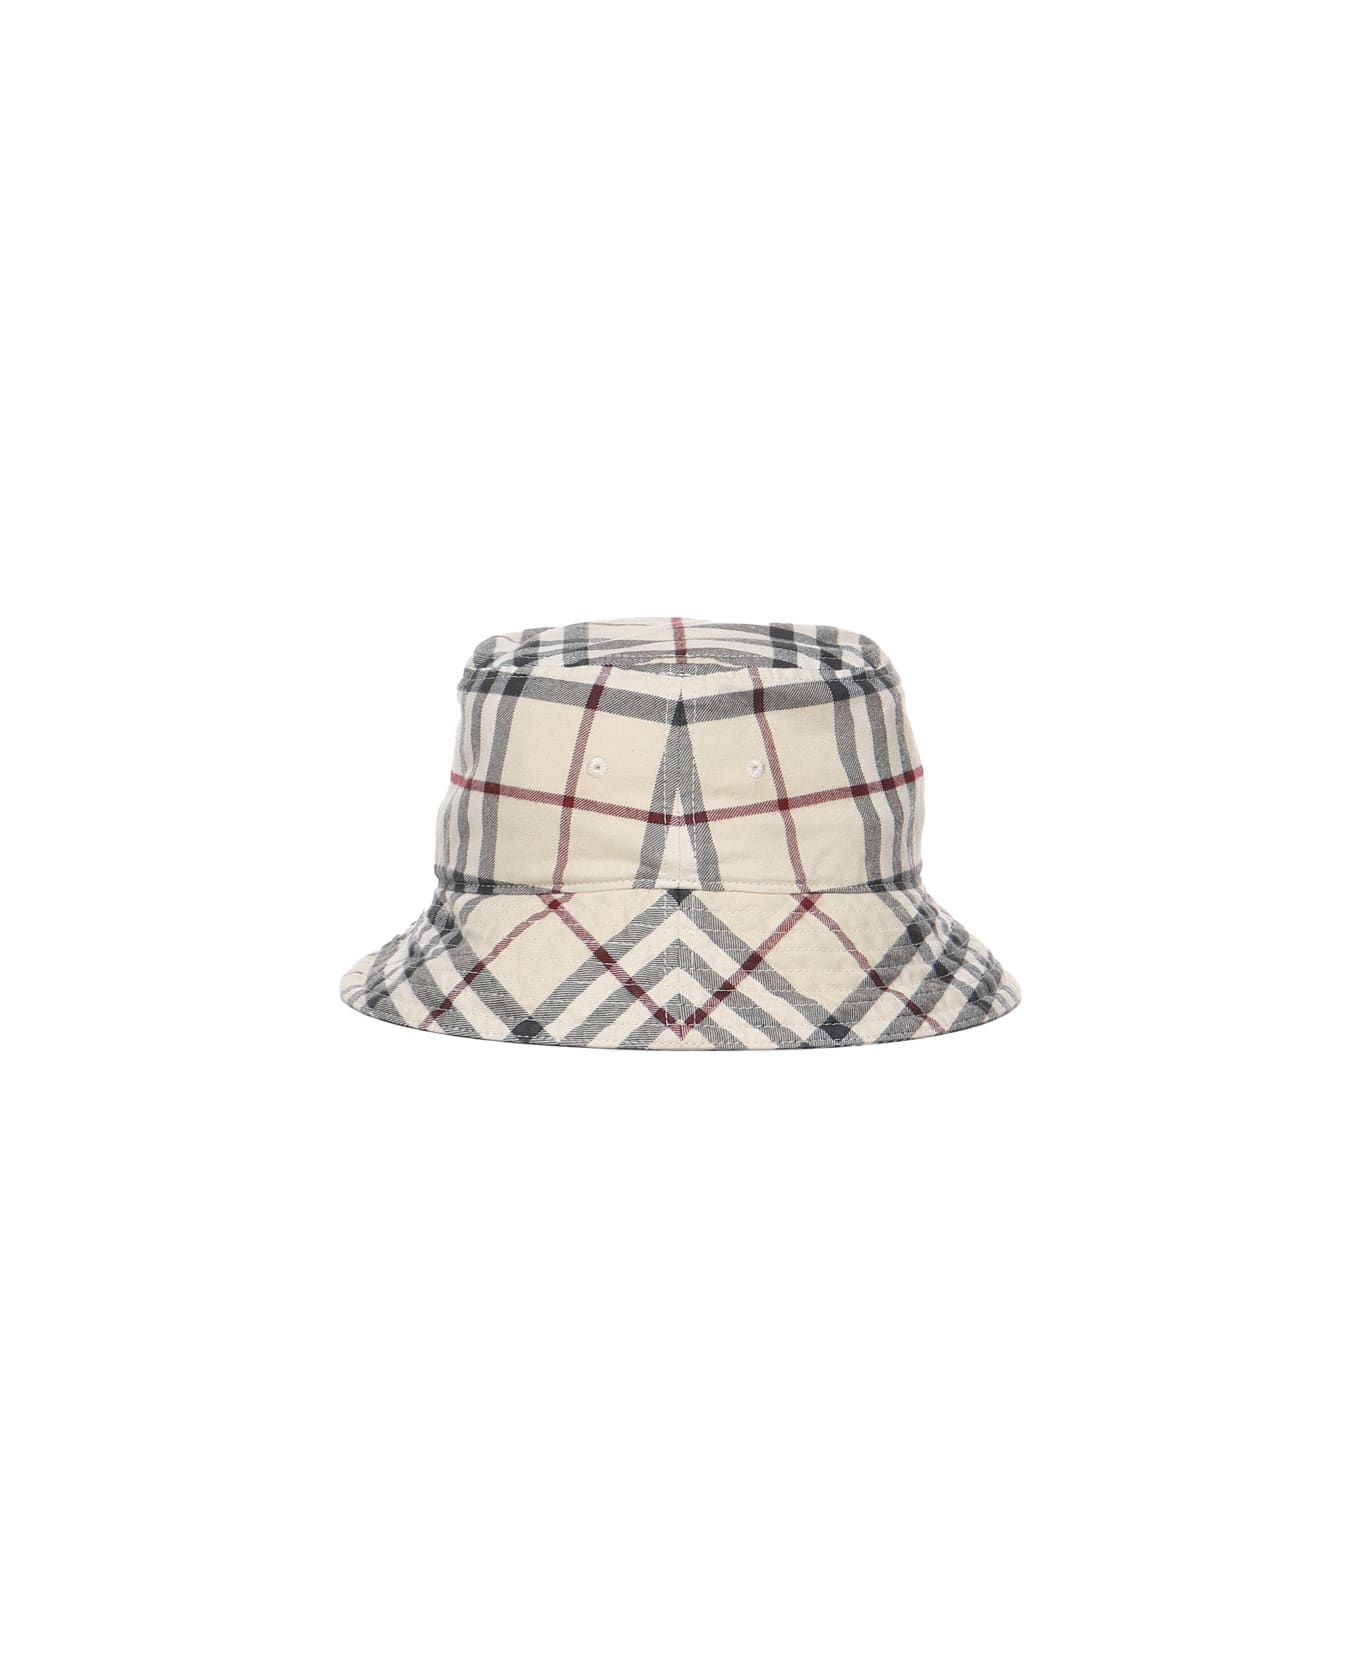 Burberry Vintage Check Bucket Hat - Vintage check